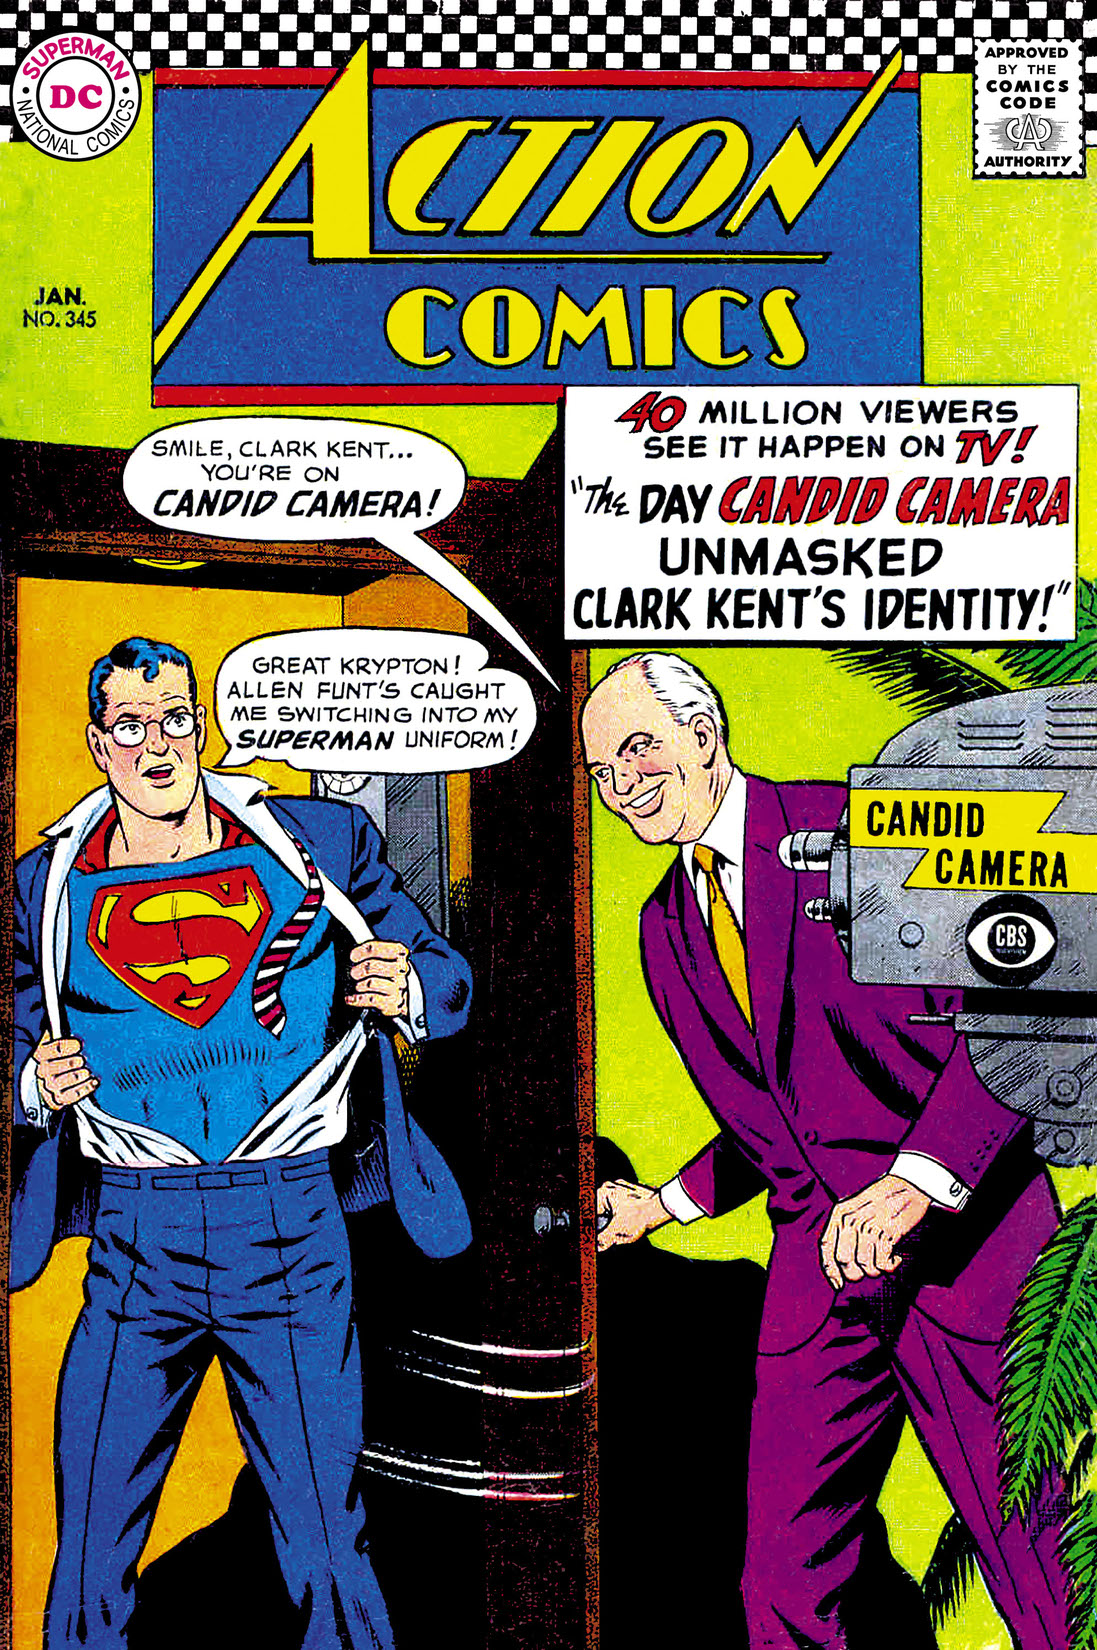 Action Comics (1938-) #345 preview images